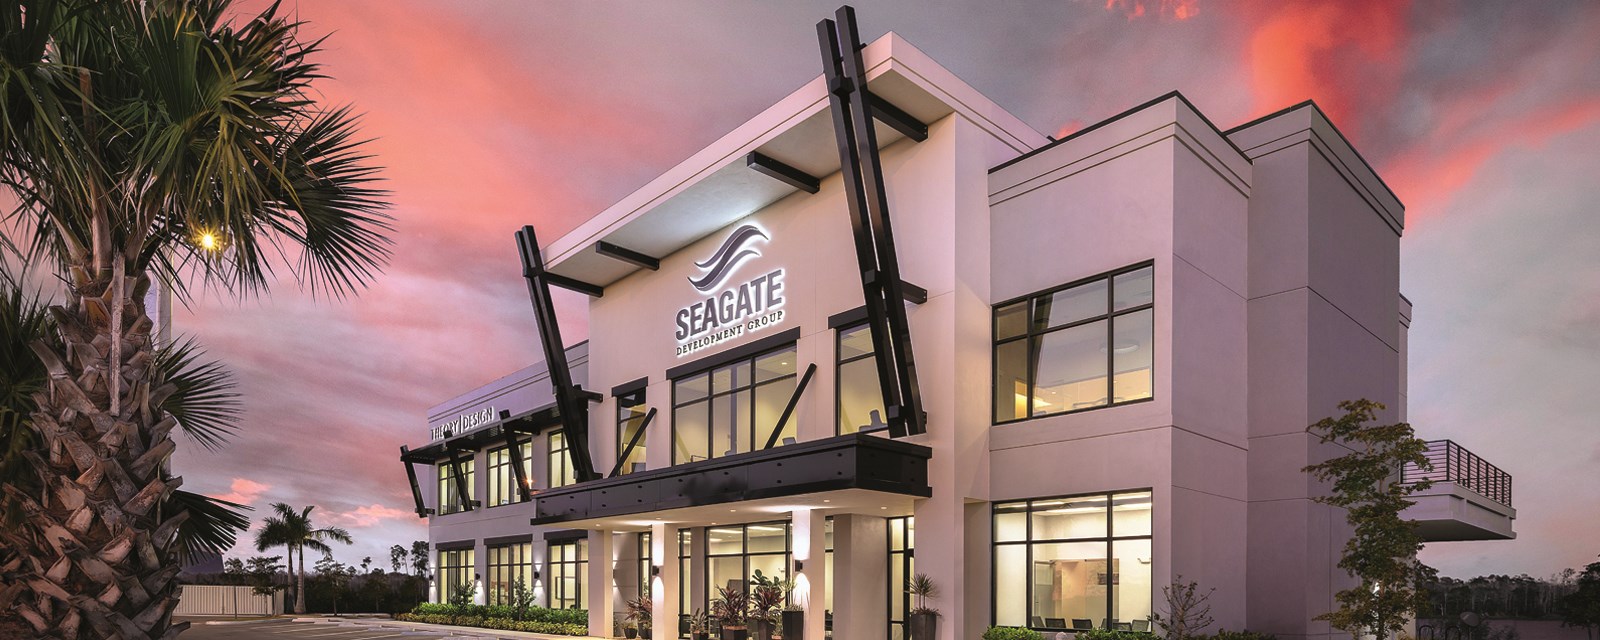 Seagate Development Group Corporate Headquarters